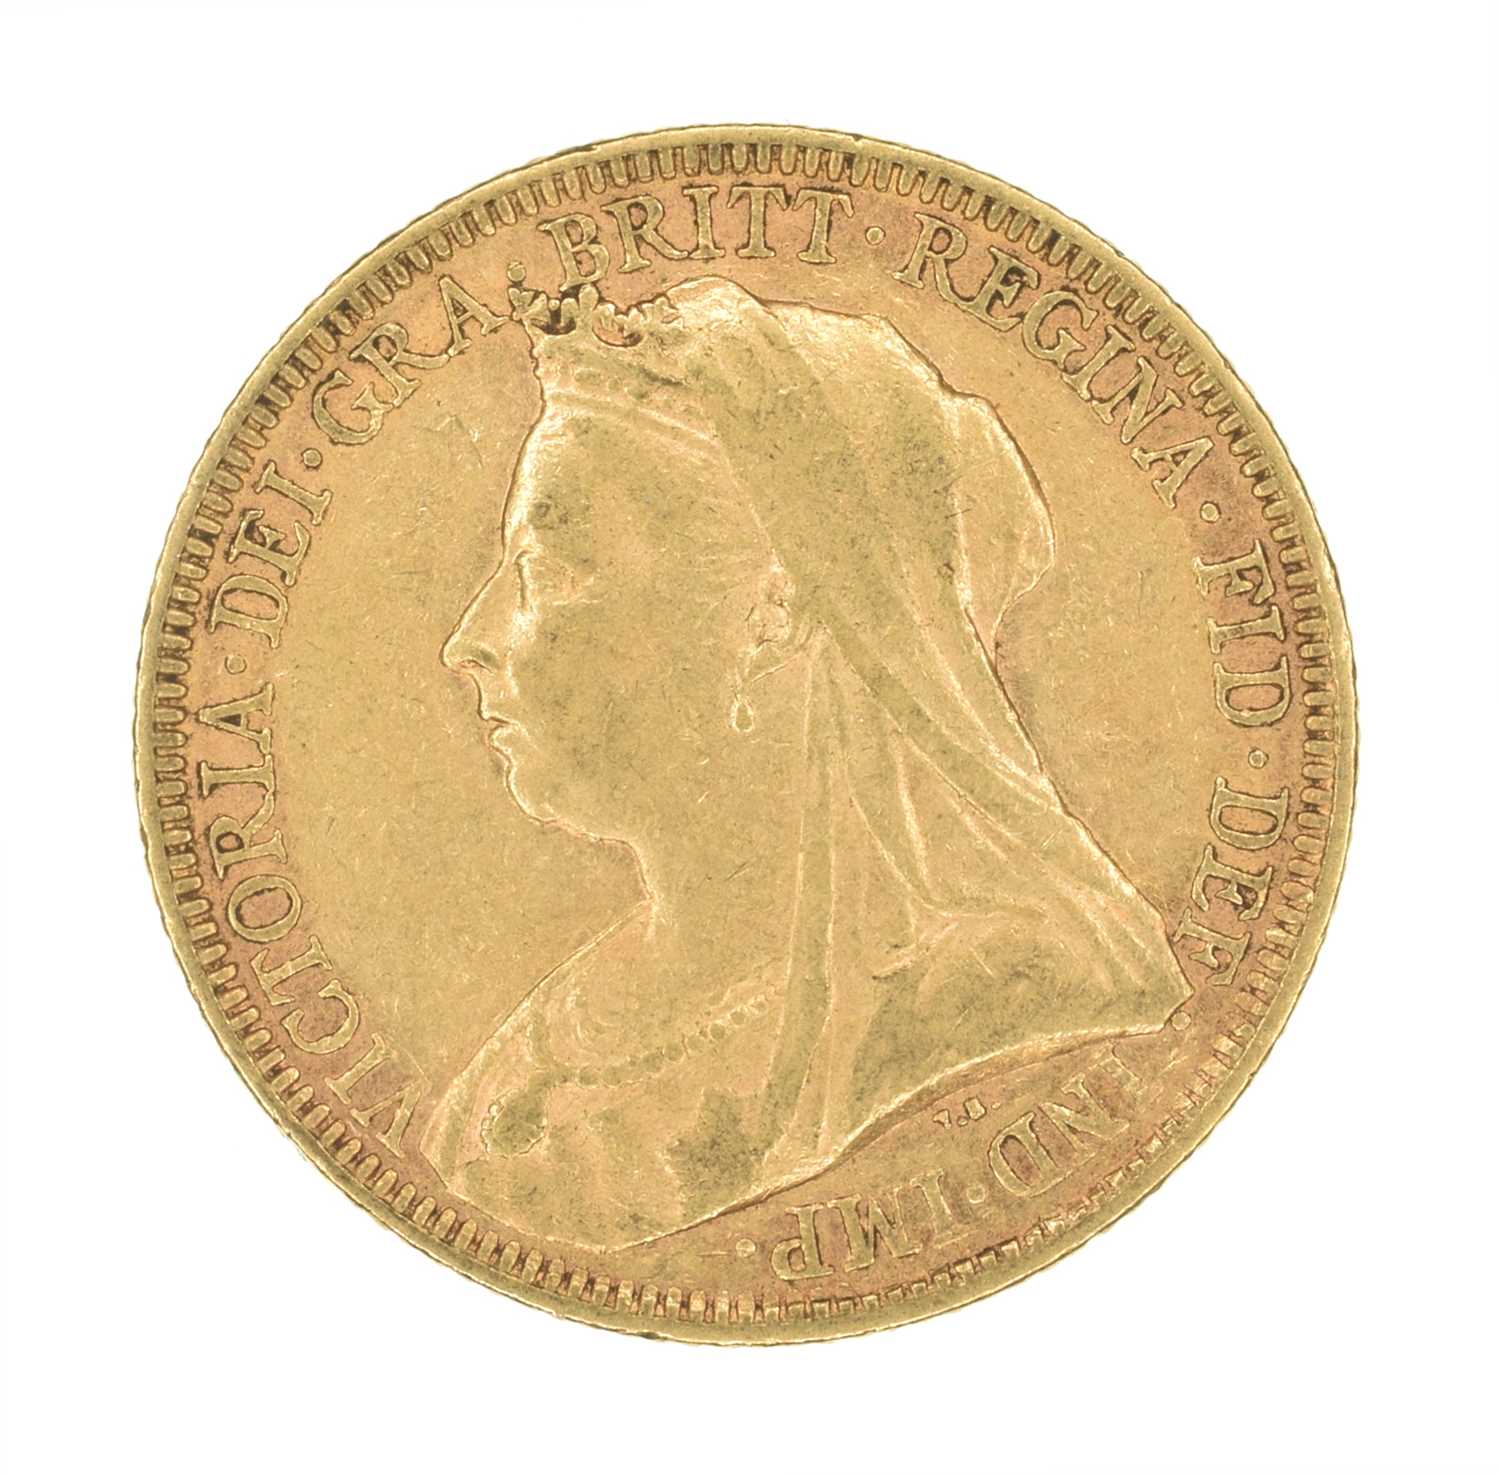 Lot 133 - Queen Victoria, Sovereign, 1897, Melbourne Mint.